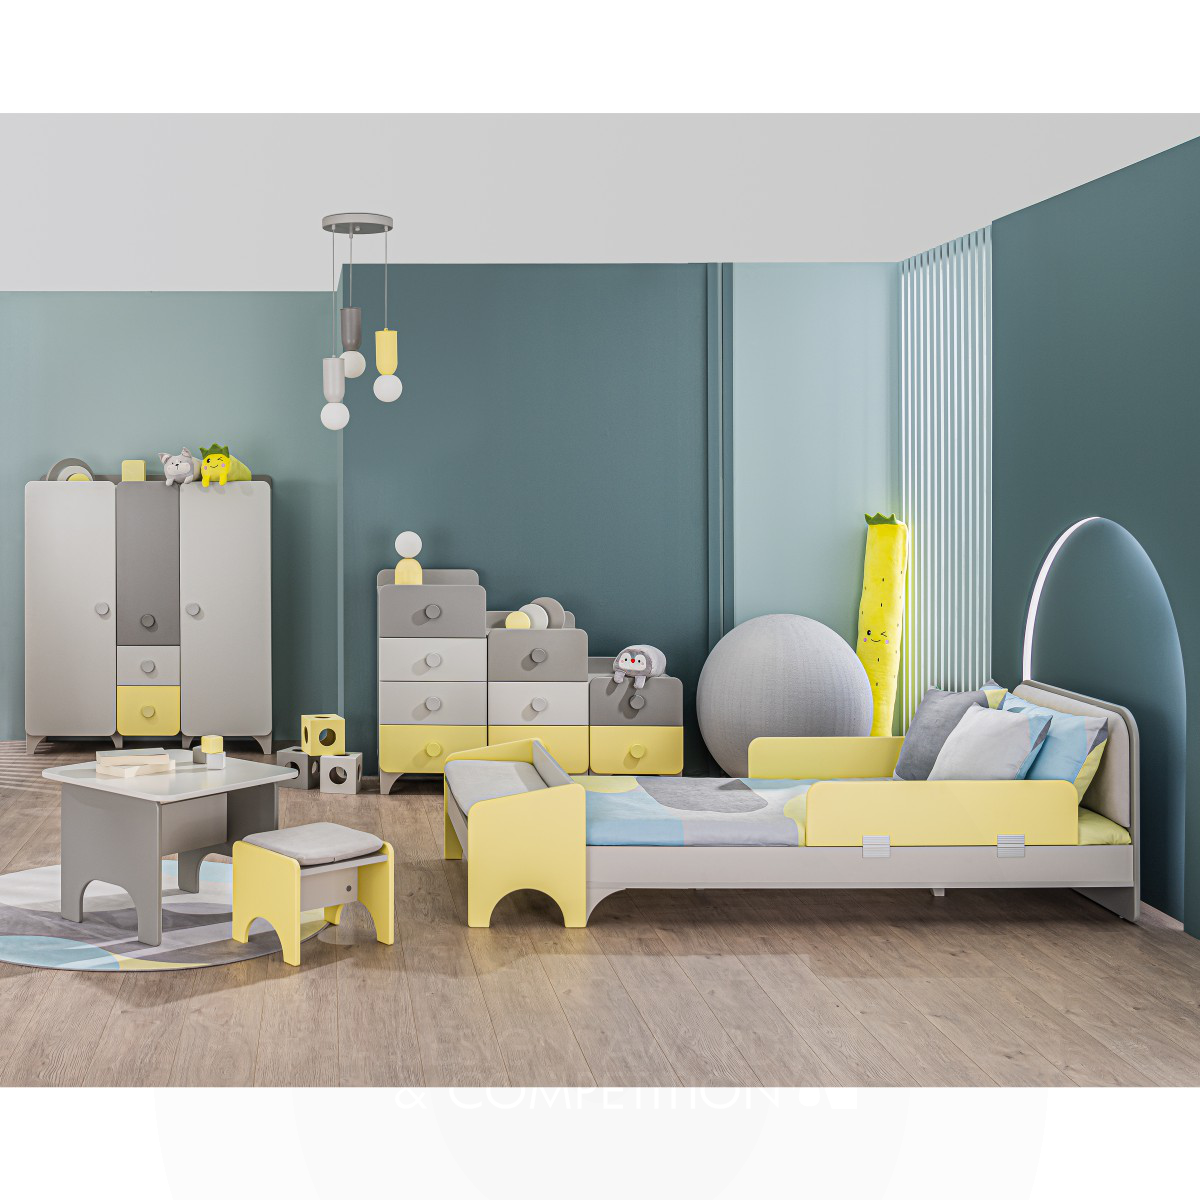 Minia Collection Child Room Furniture Set by Klaris Roditi